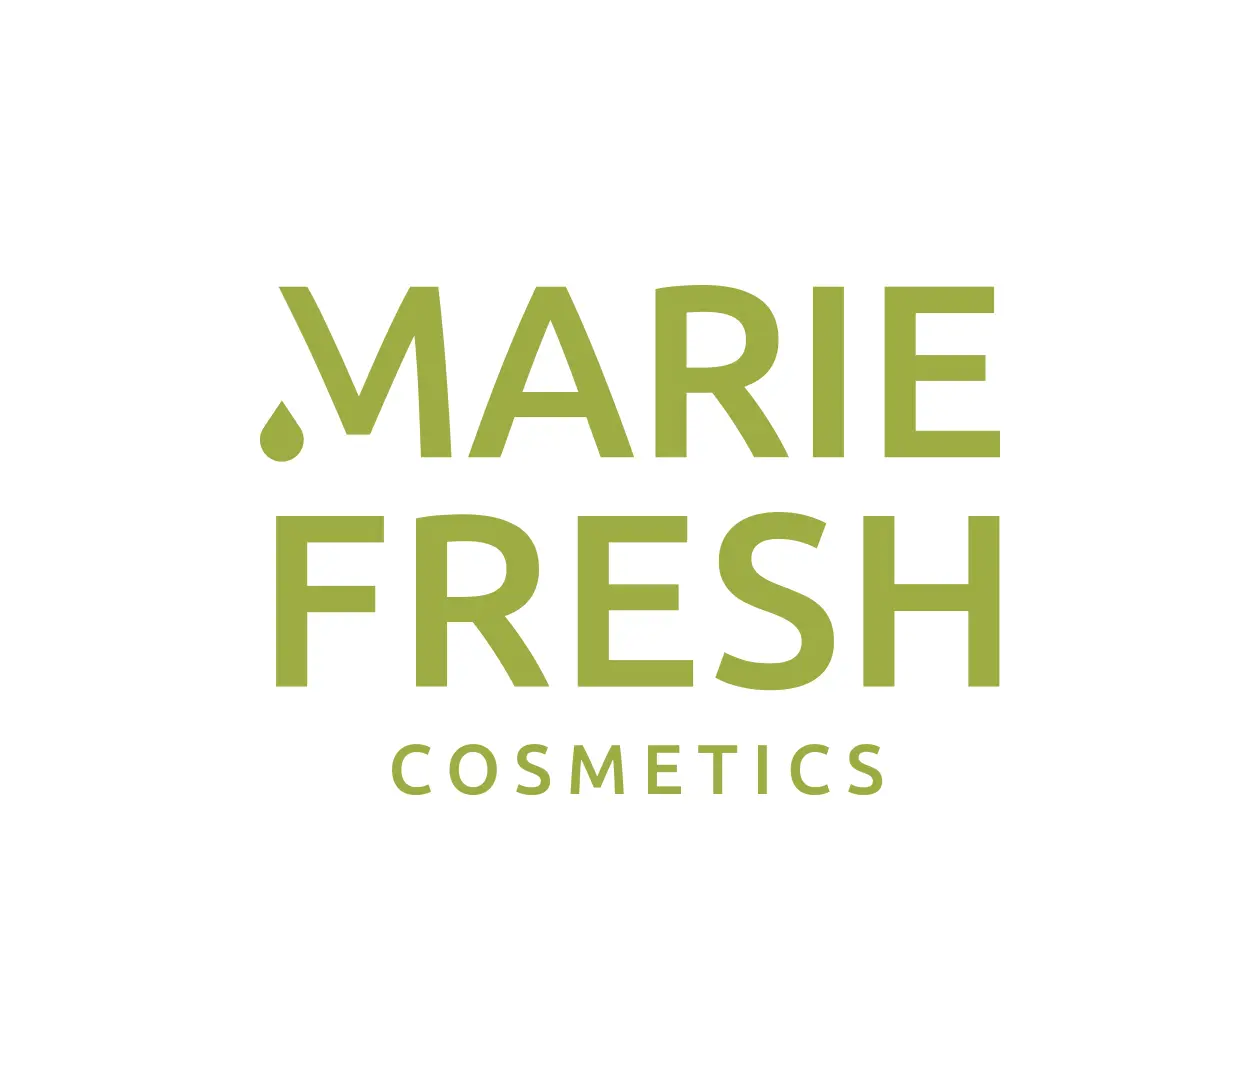 Marie Fresh